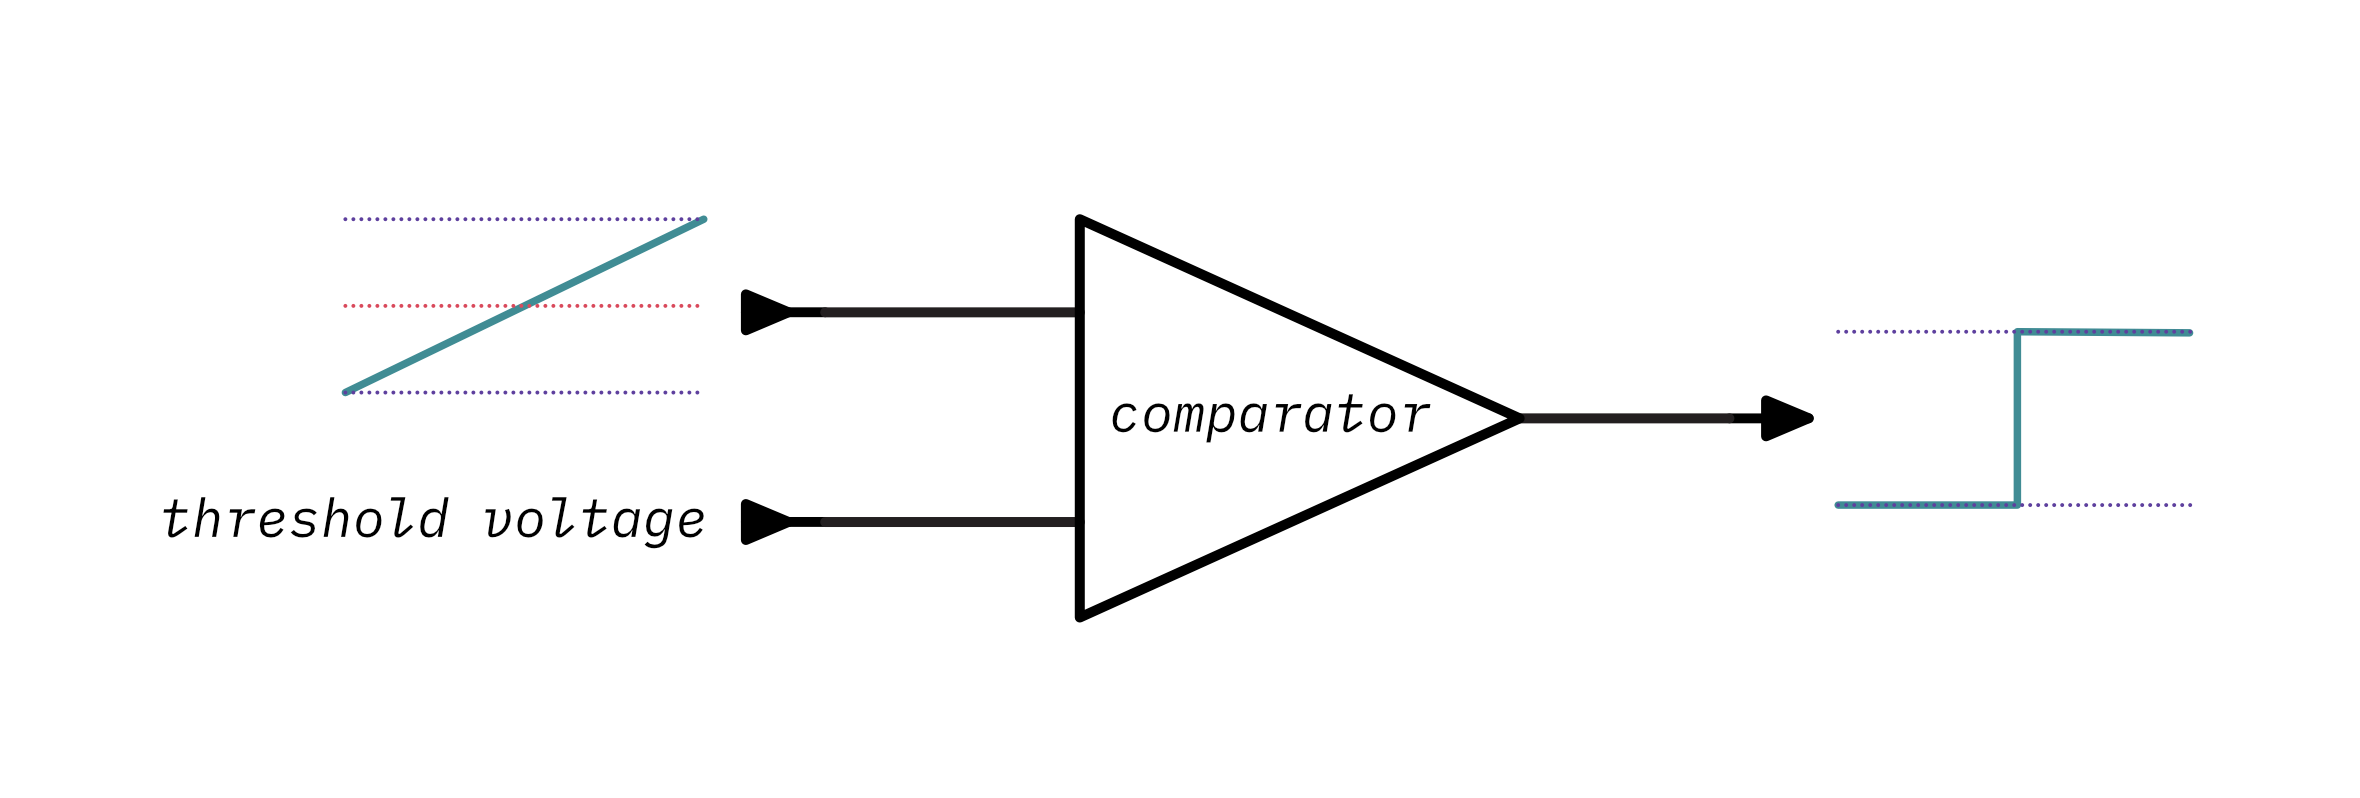 A comparator